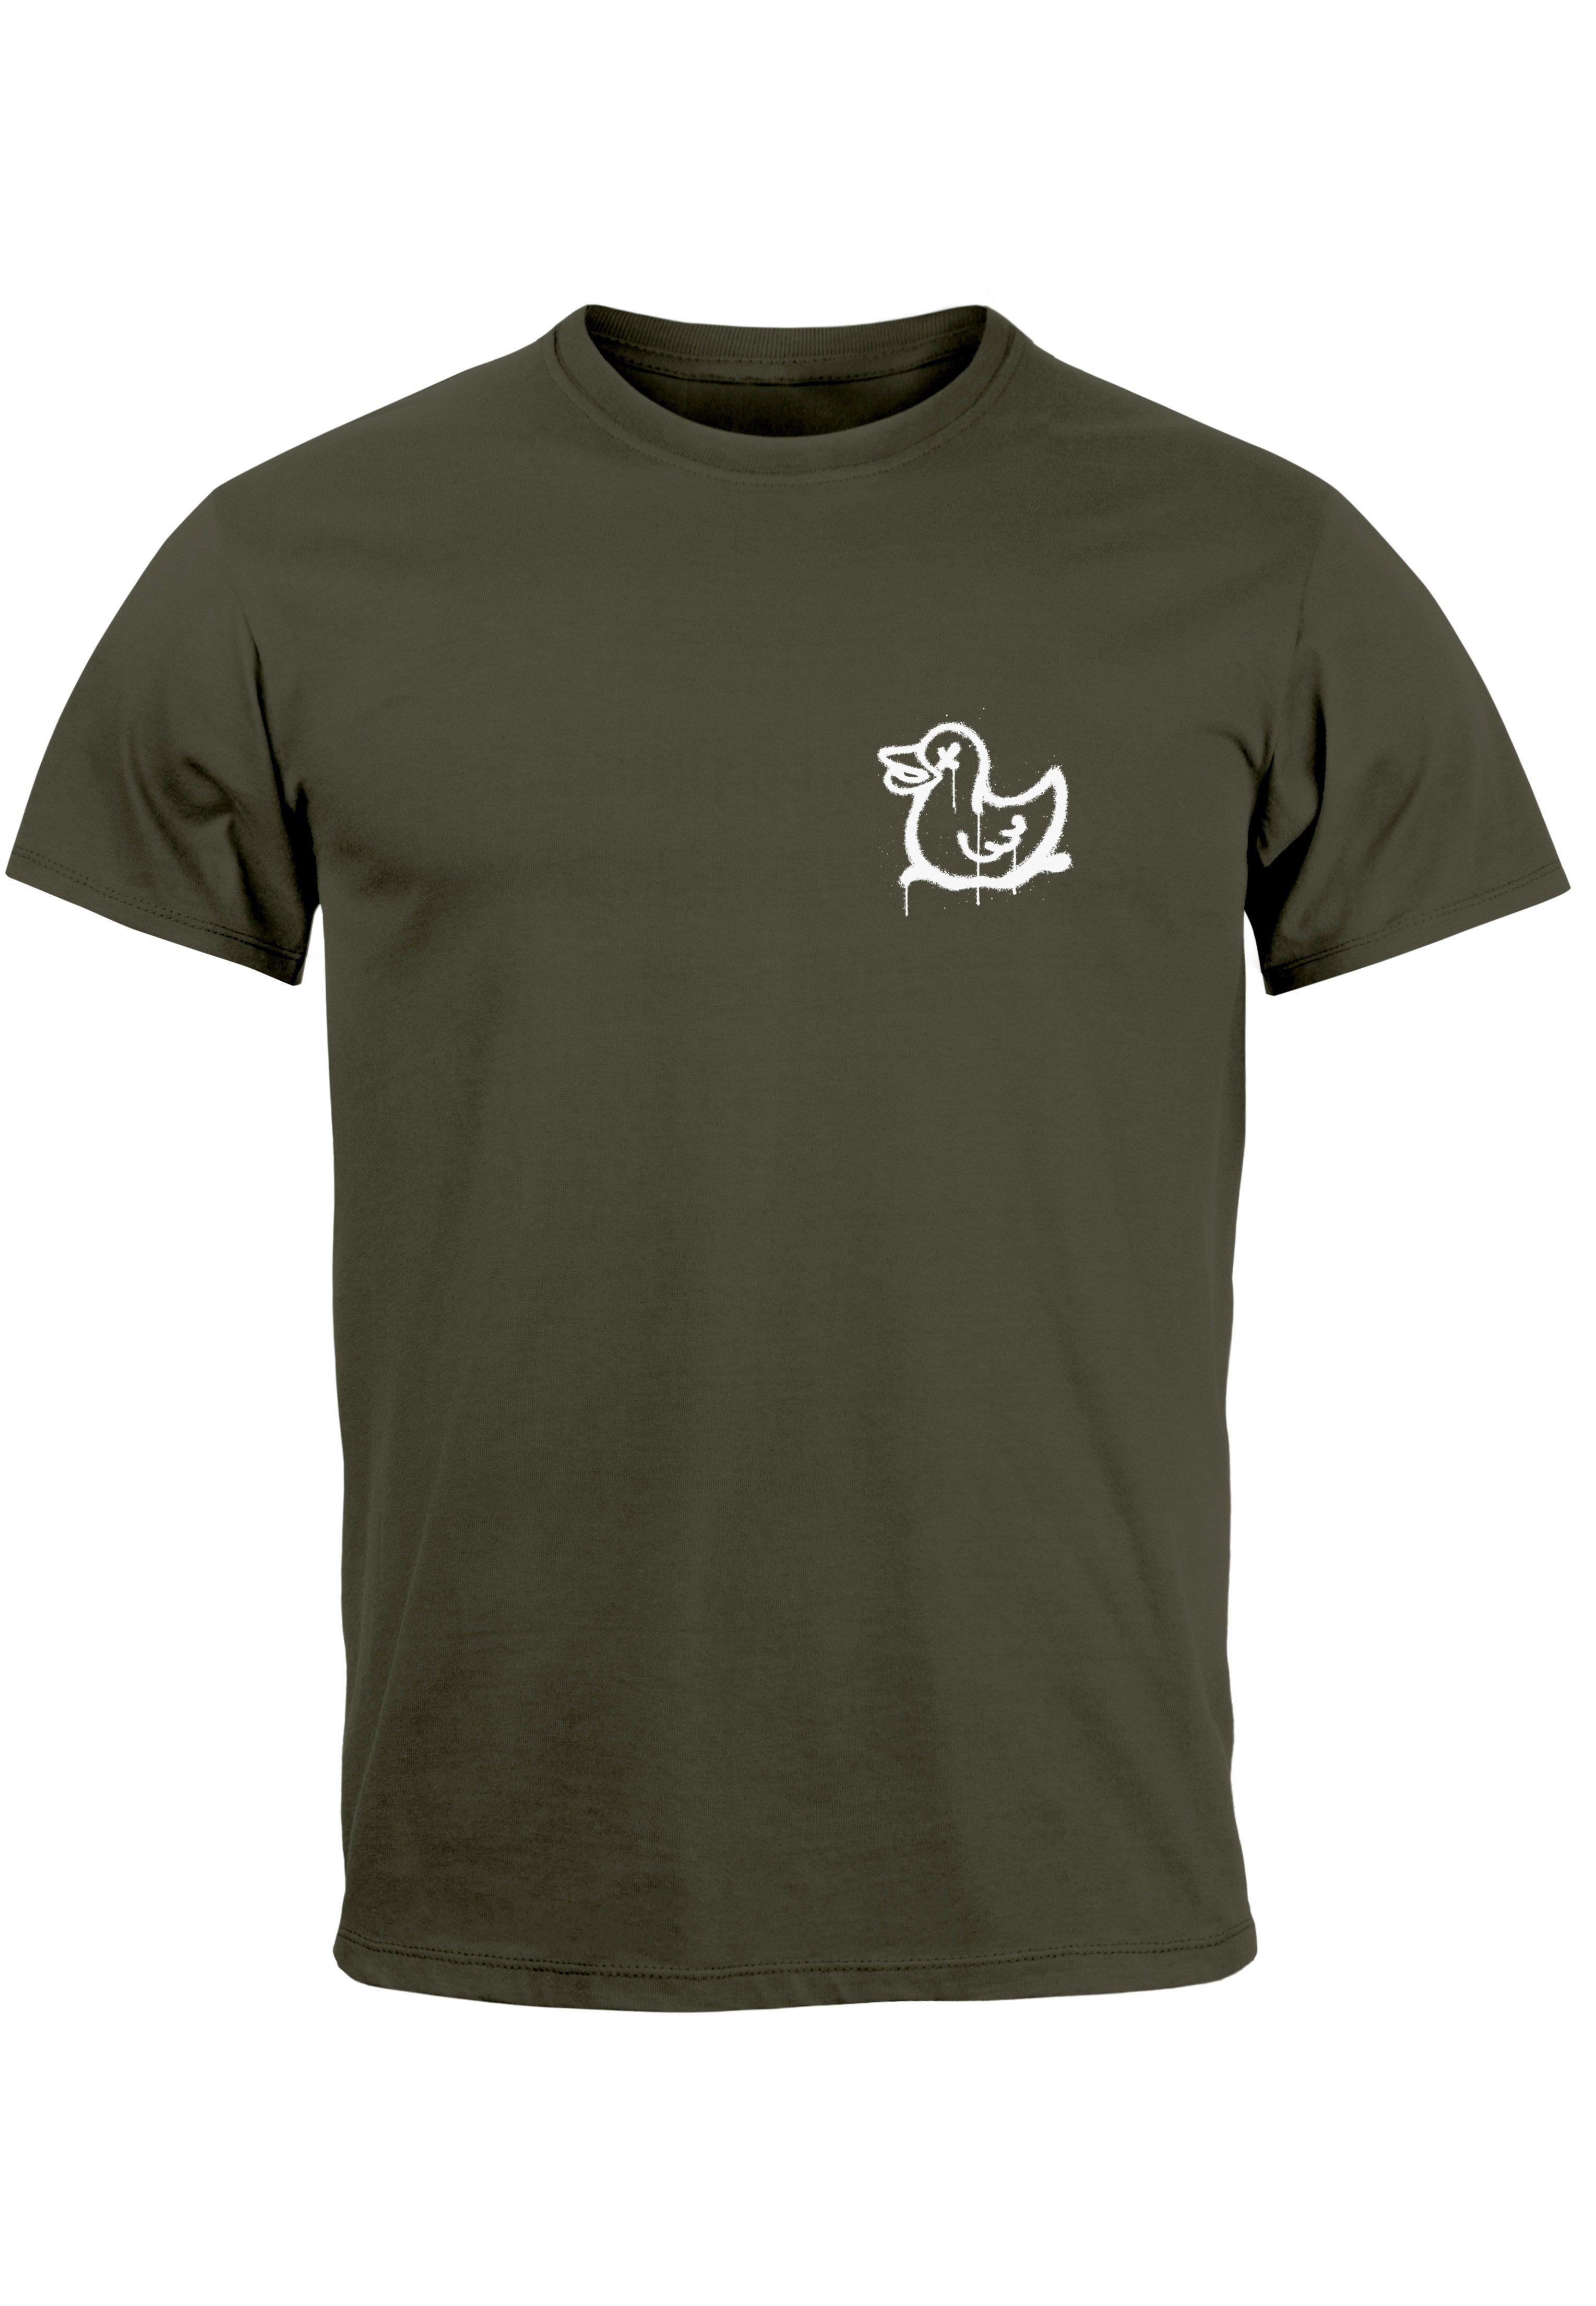 Neverless Print-Shirt Herren T-Shirt Drippy Duck Ente Graffiti Style Printshirt Fashion Stre mit Print army